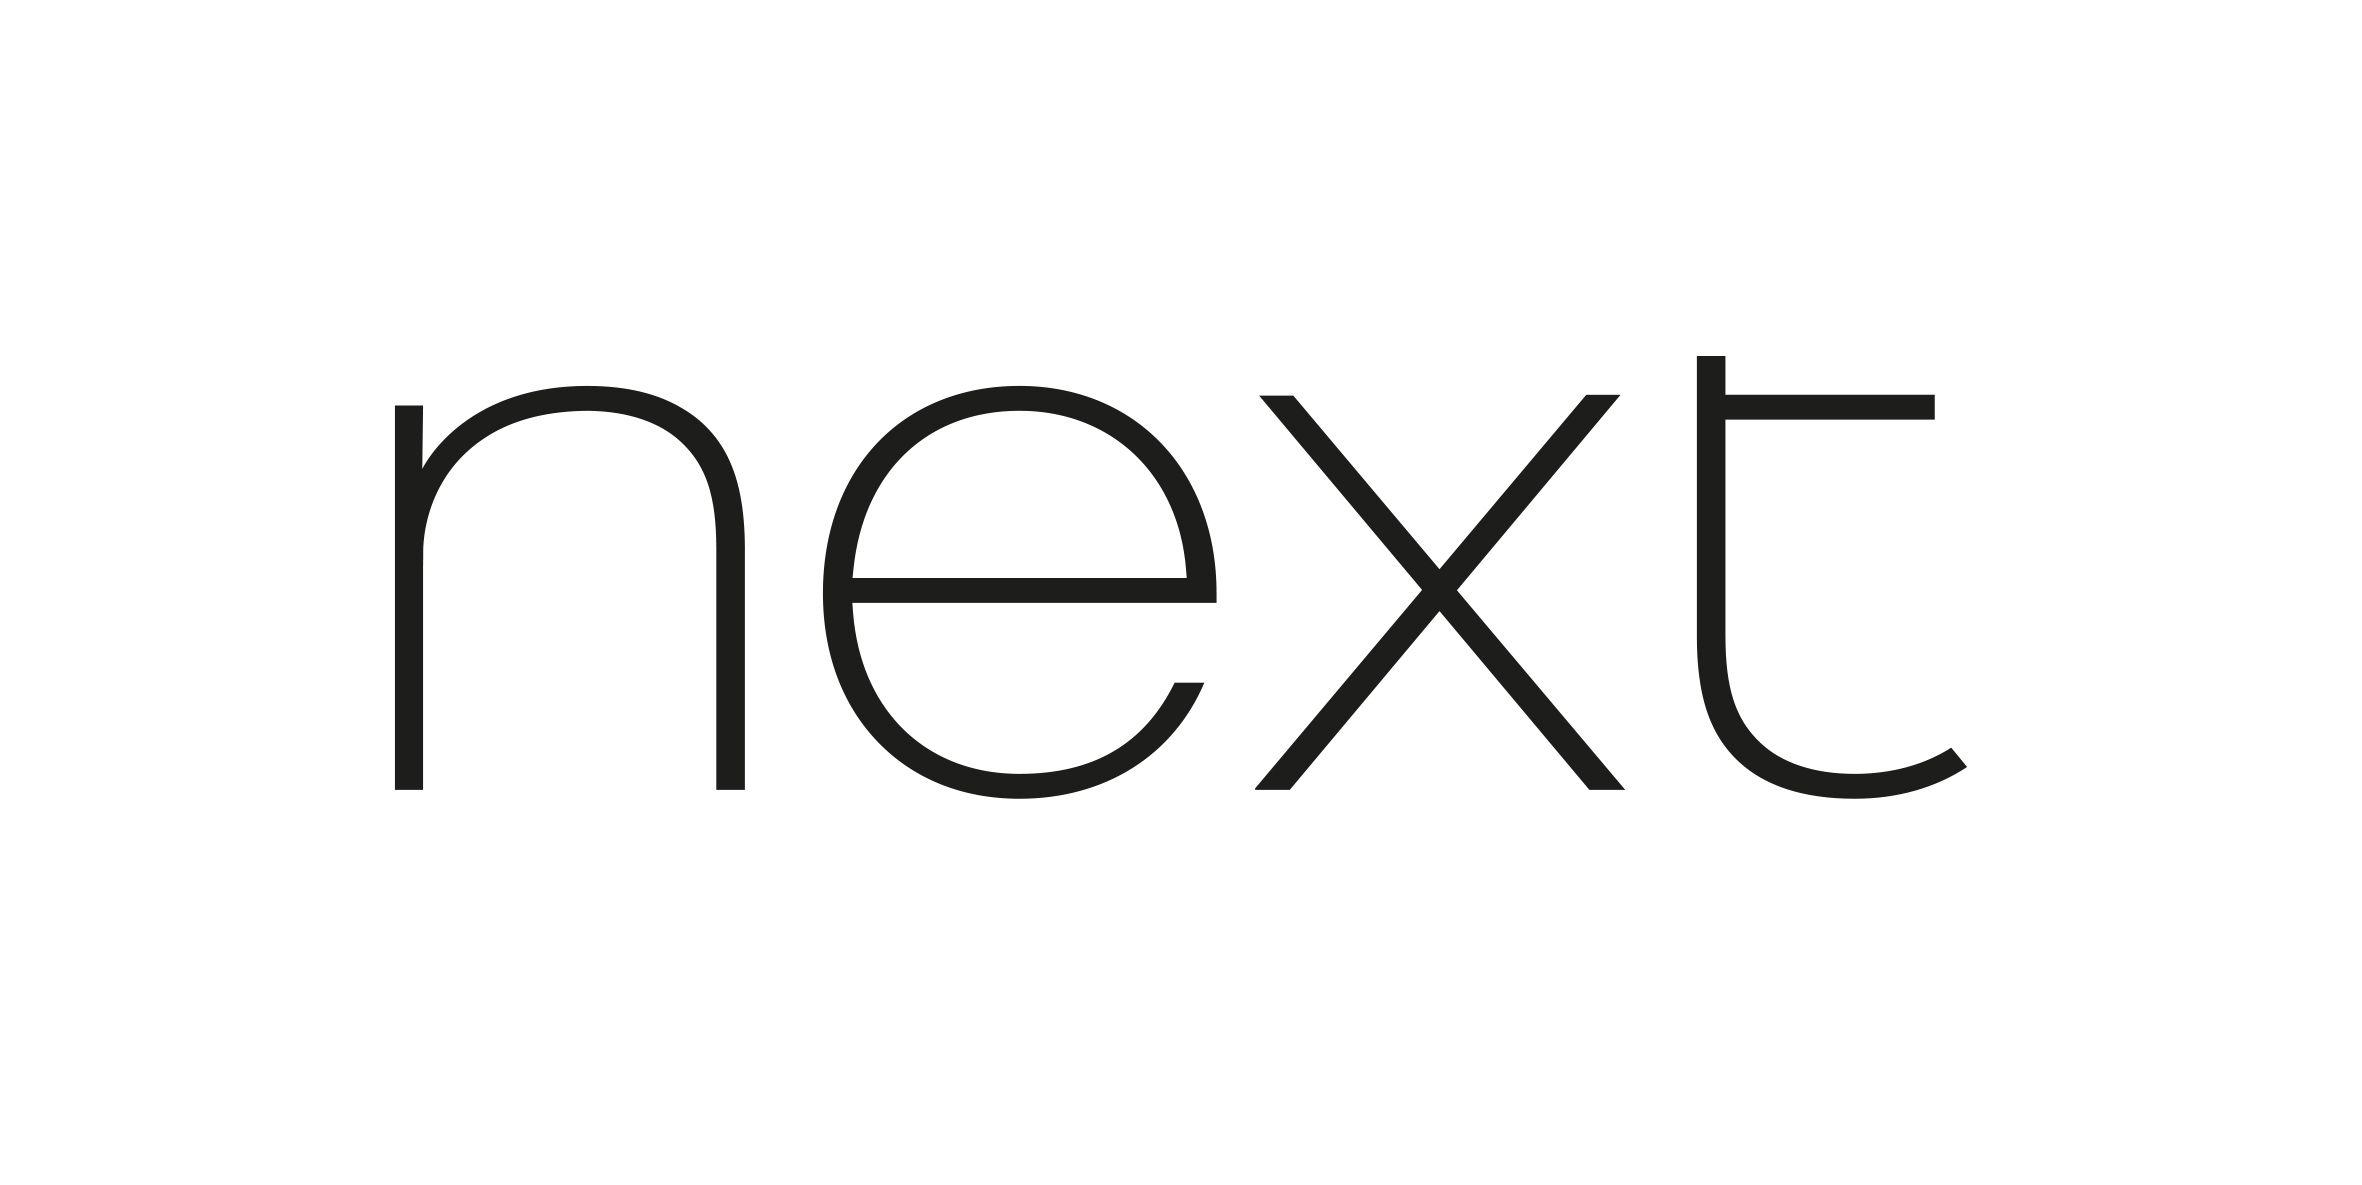 Next Logo - Logos – Next Plc